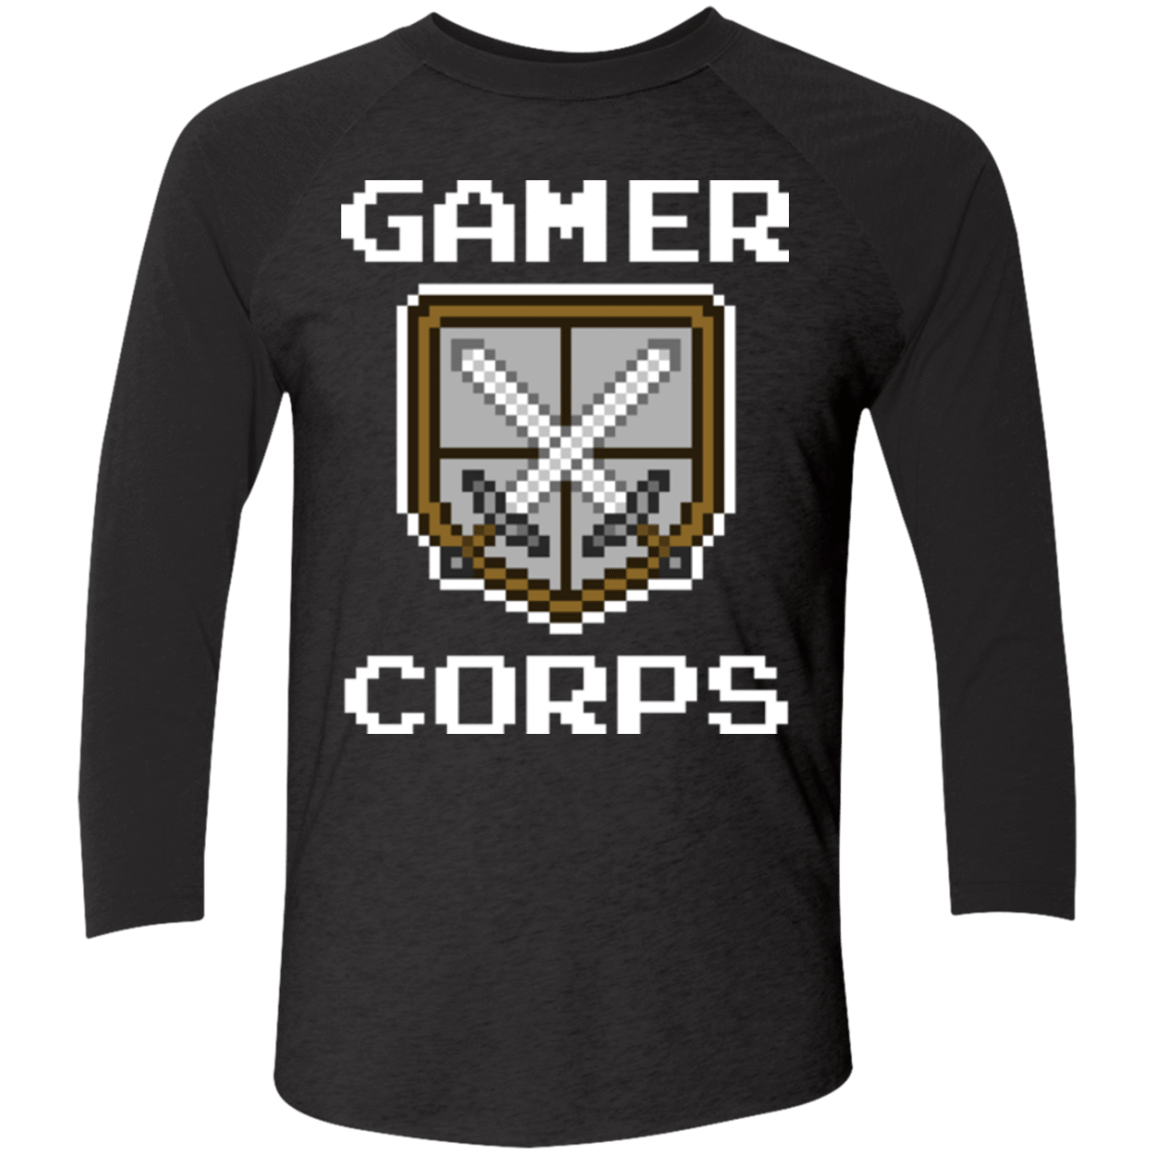 T-Shirts Vintage Black/Vintage Black / X-Small Gamer corps Men's Triblend 3/4 Sleeve